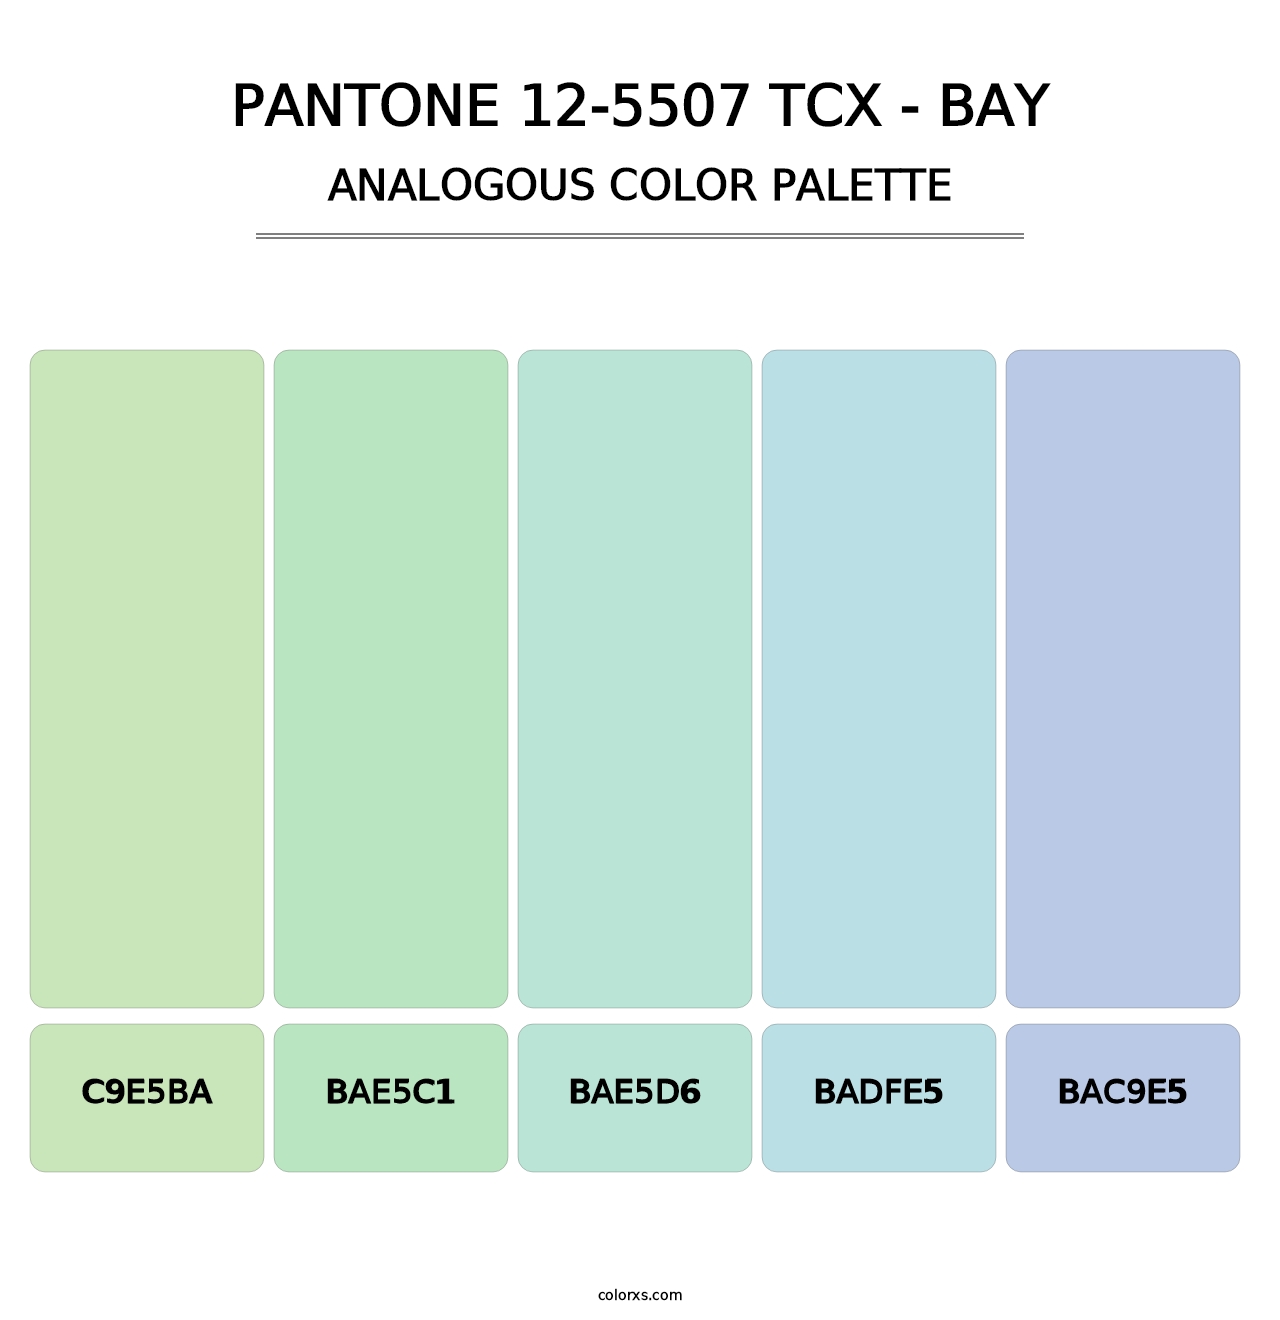 PANTONE 12-5507 TCX - Bay - Analogous Color Palette